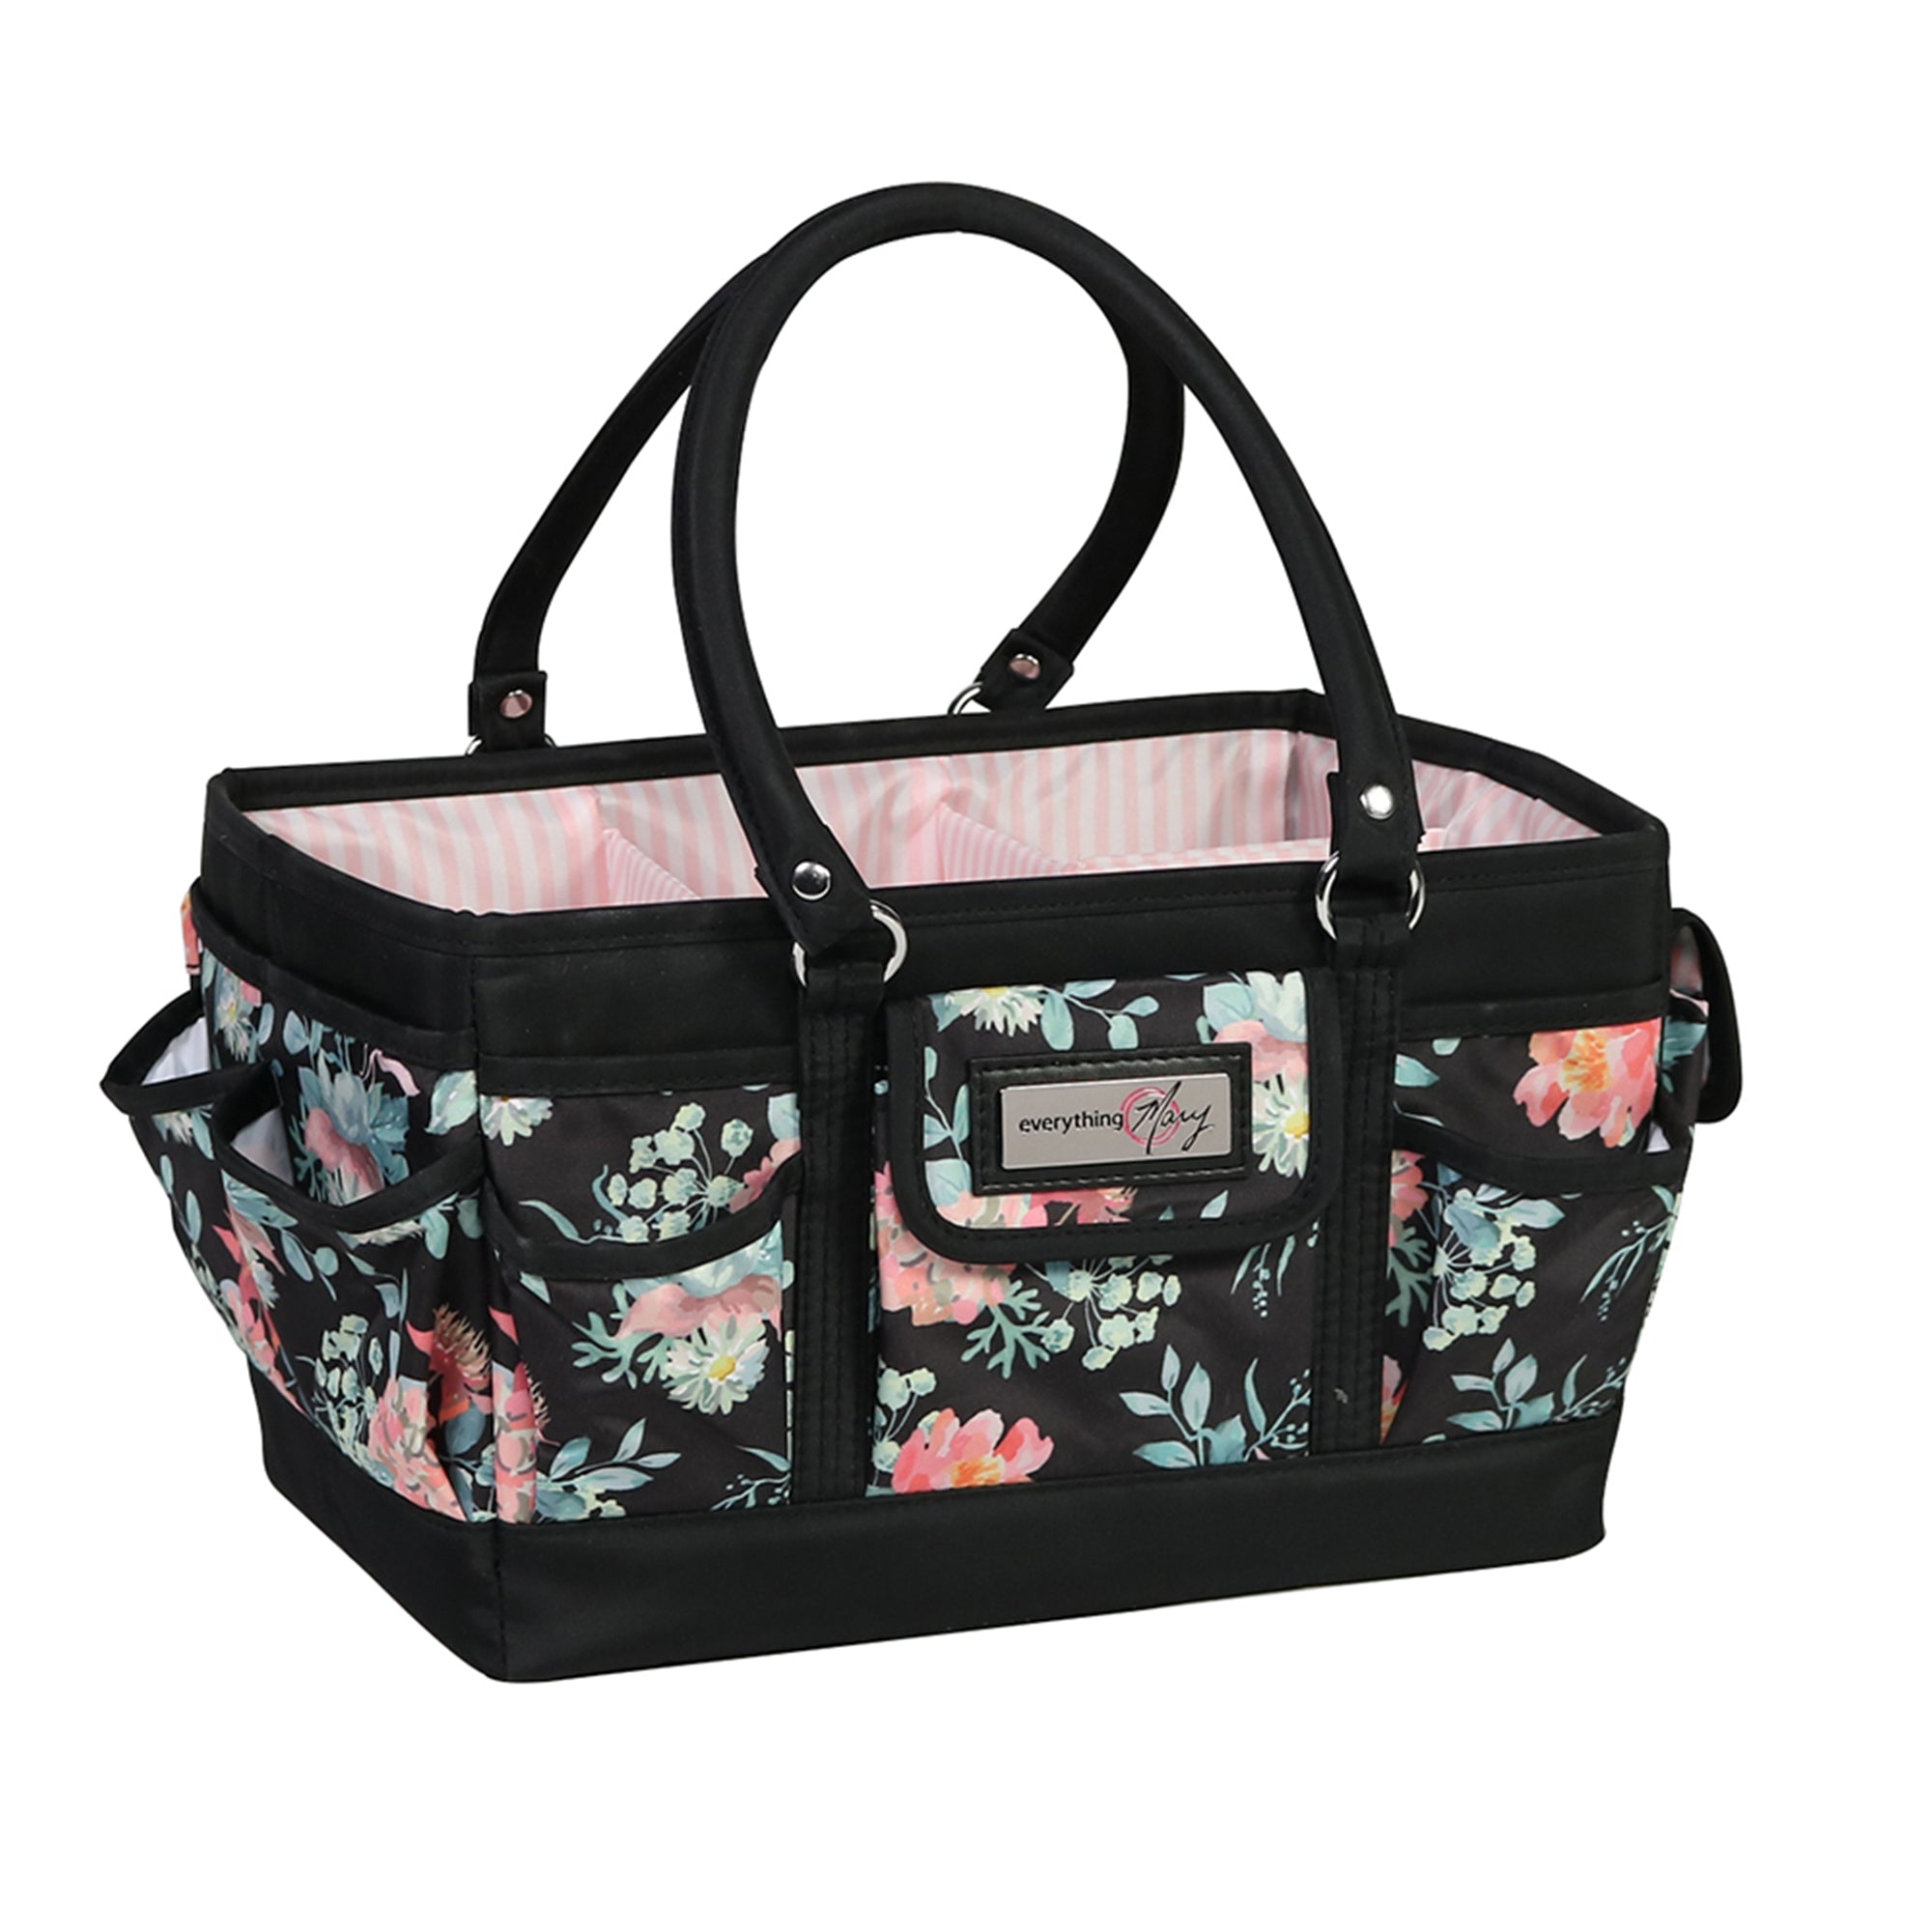  KIEKIECOO 2 pc Black Canvas Tote Bag women Floral Line Art  Makeup Bags Reusable Grocery Bag Capacity Shopping Shoulder Bag(2pc DIY) :  Home & Kitchen